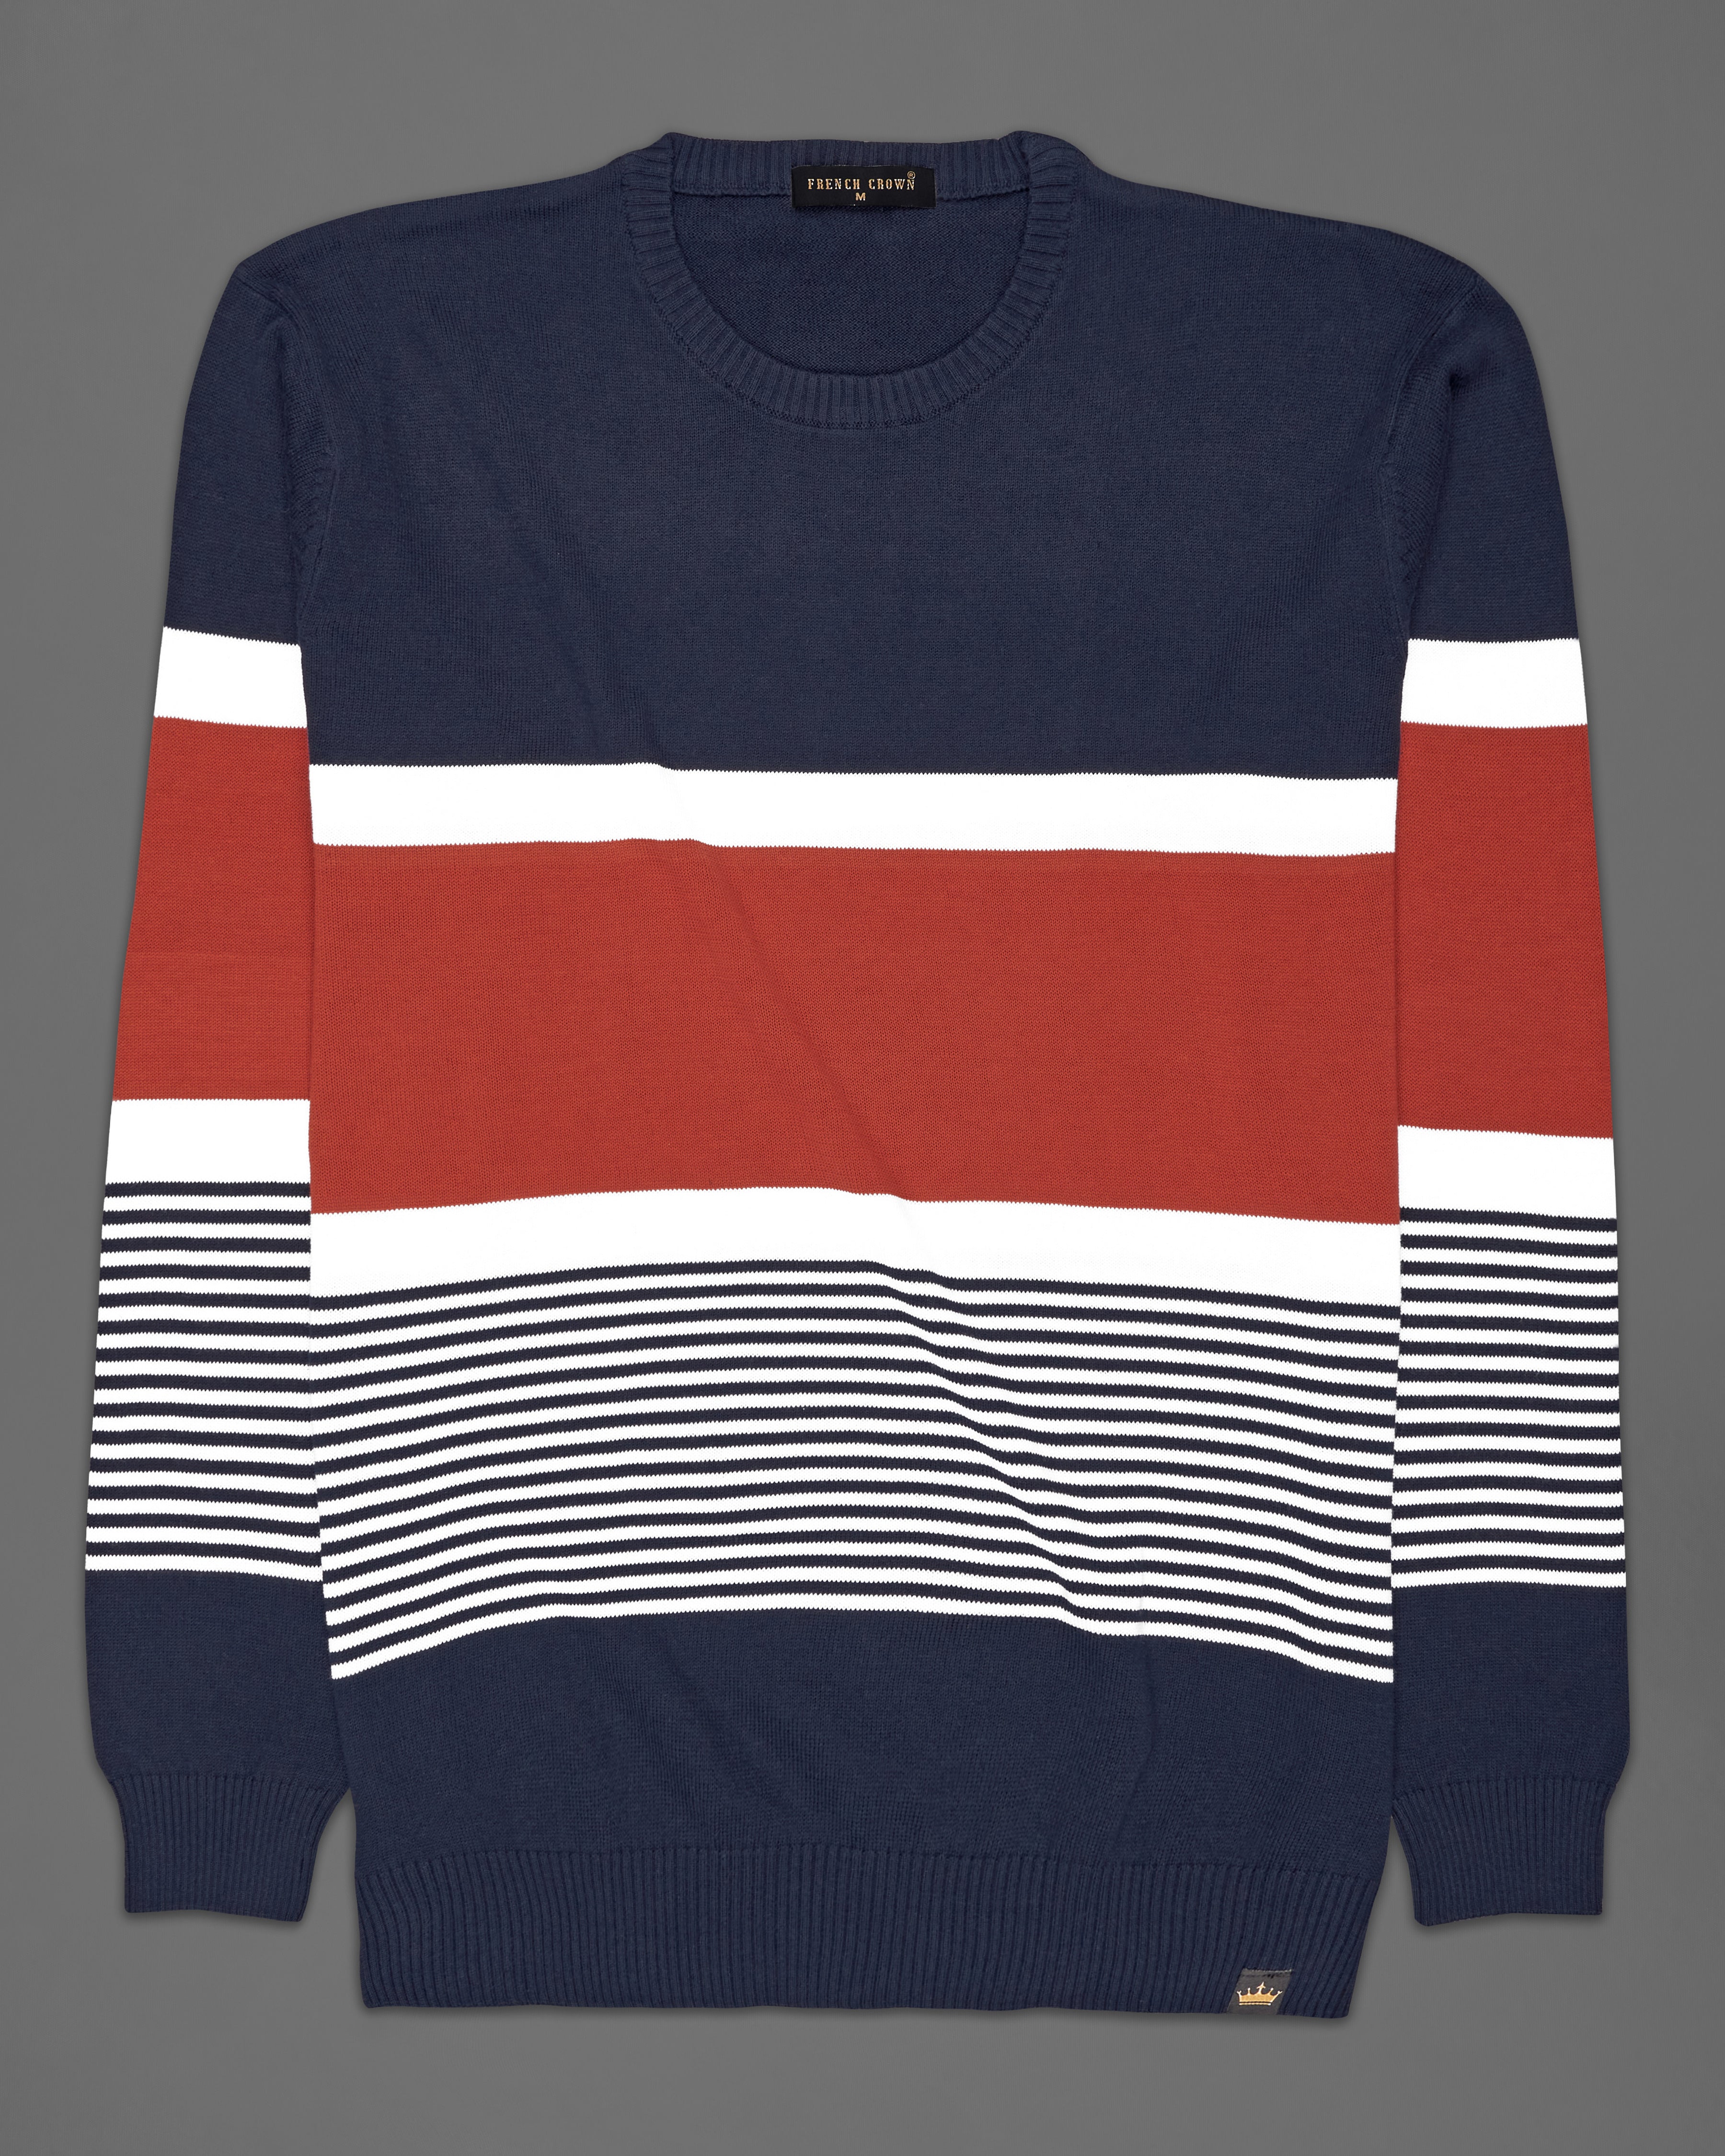 Ebony Navy Blue with Carmine Red and White Striped Premium Interlock Cotton Fabric Sweatshirt TS702-S, TS702-M, TS702-L, TS702-XL, TS702-XXL